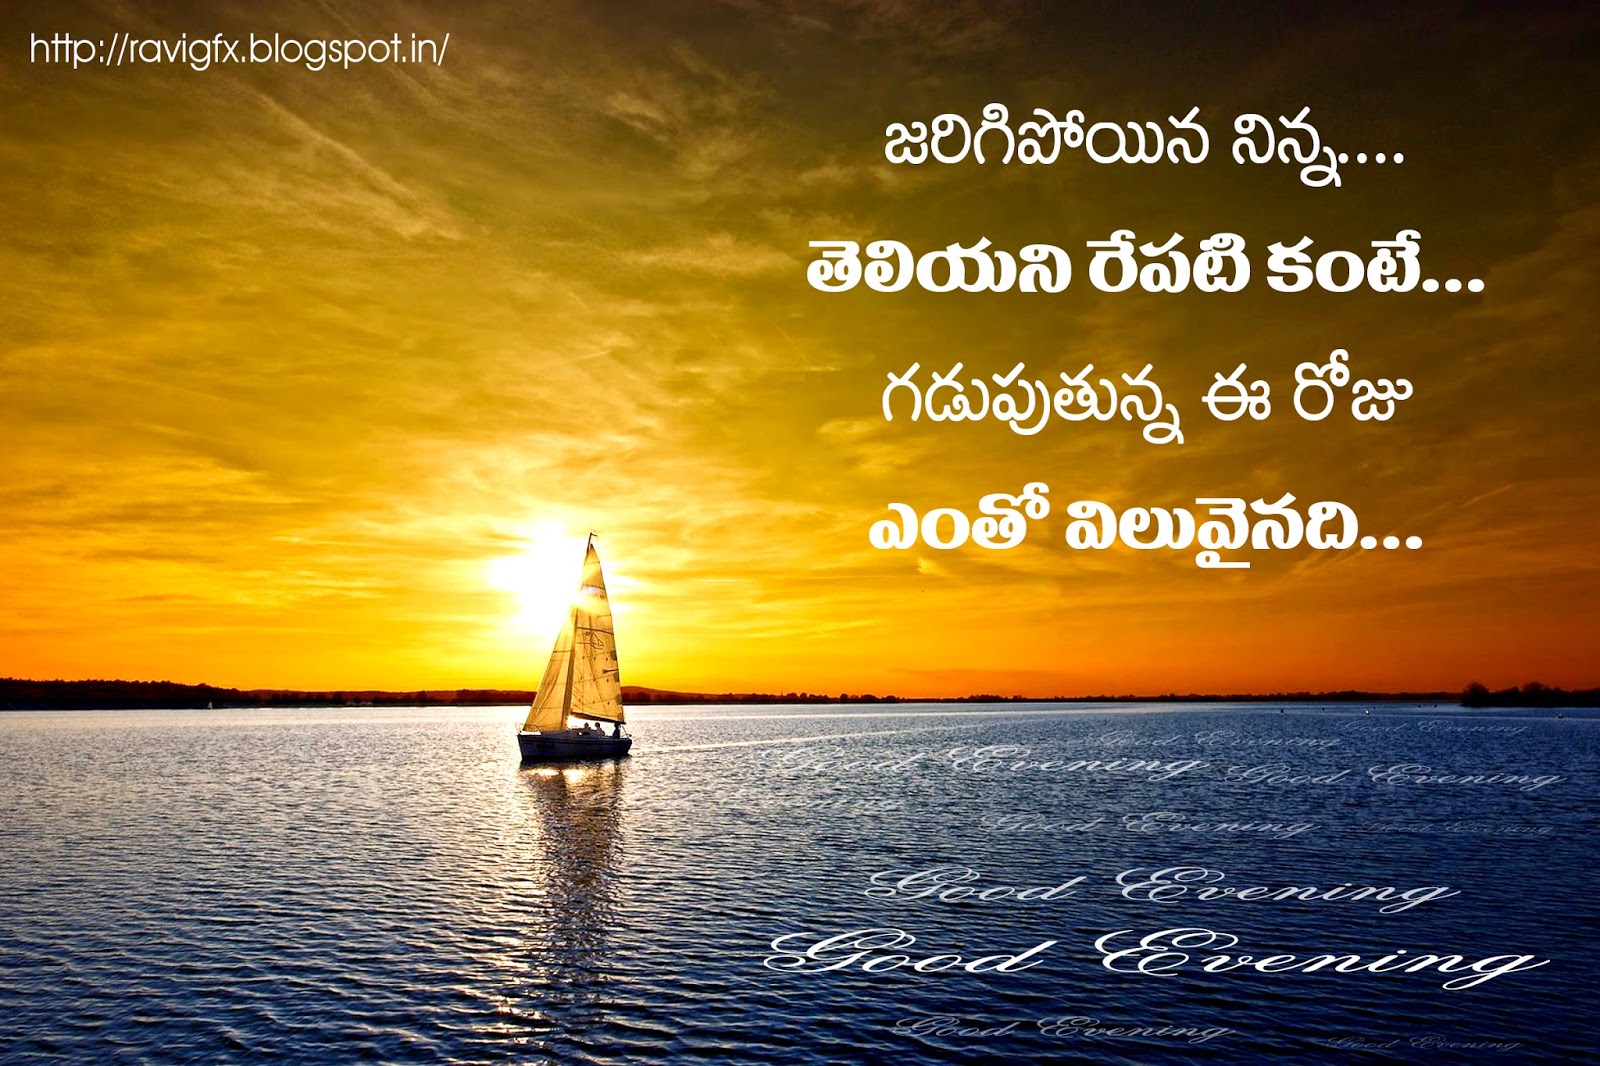 Evening Inspirational Love Quotes Good evening quotes inspirational in telugu